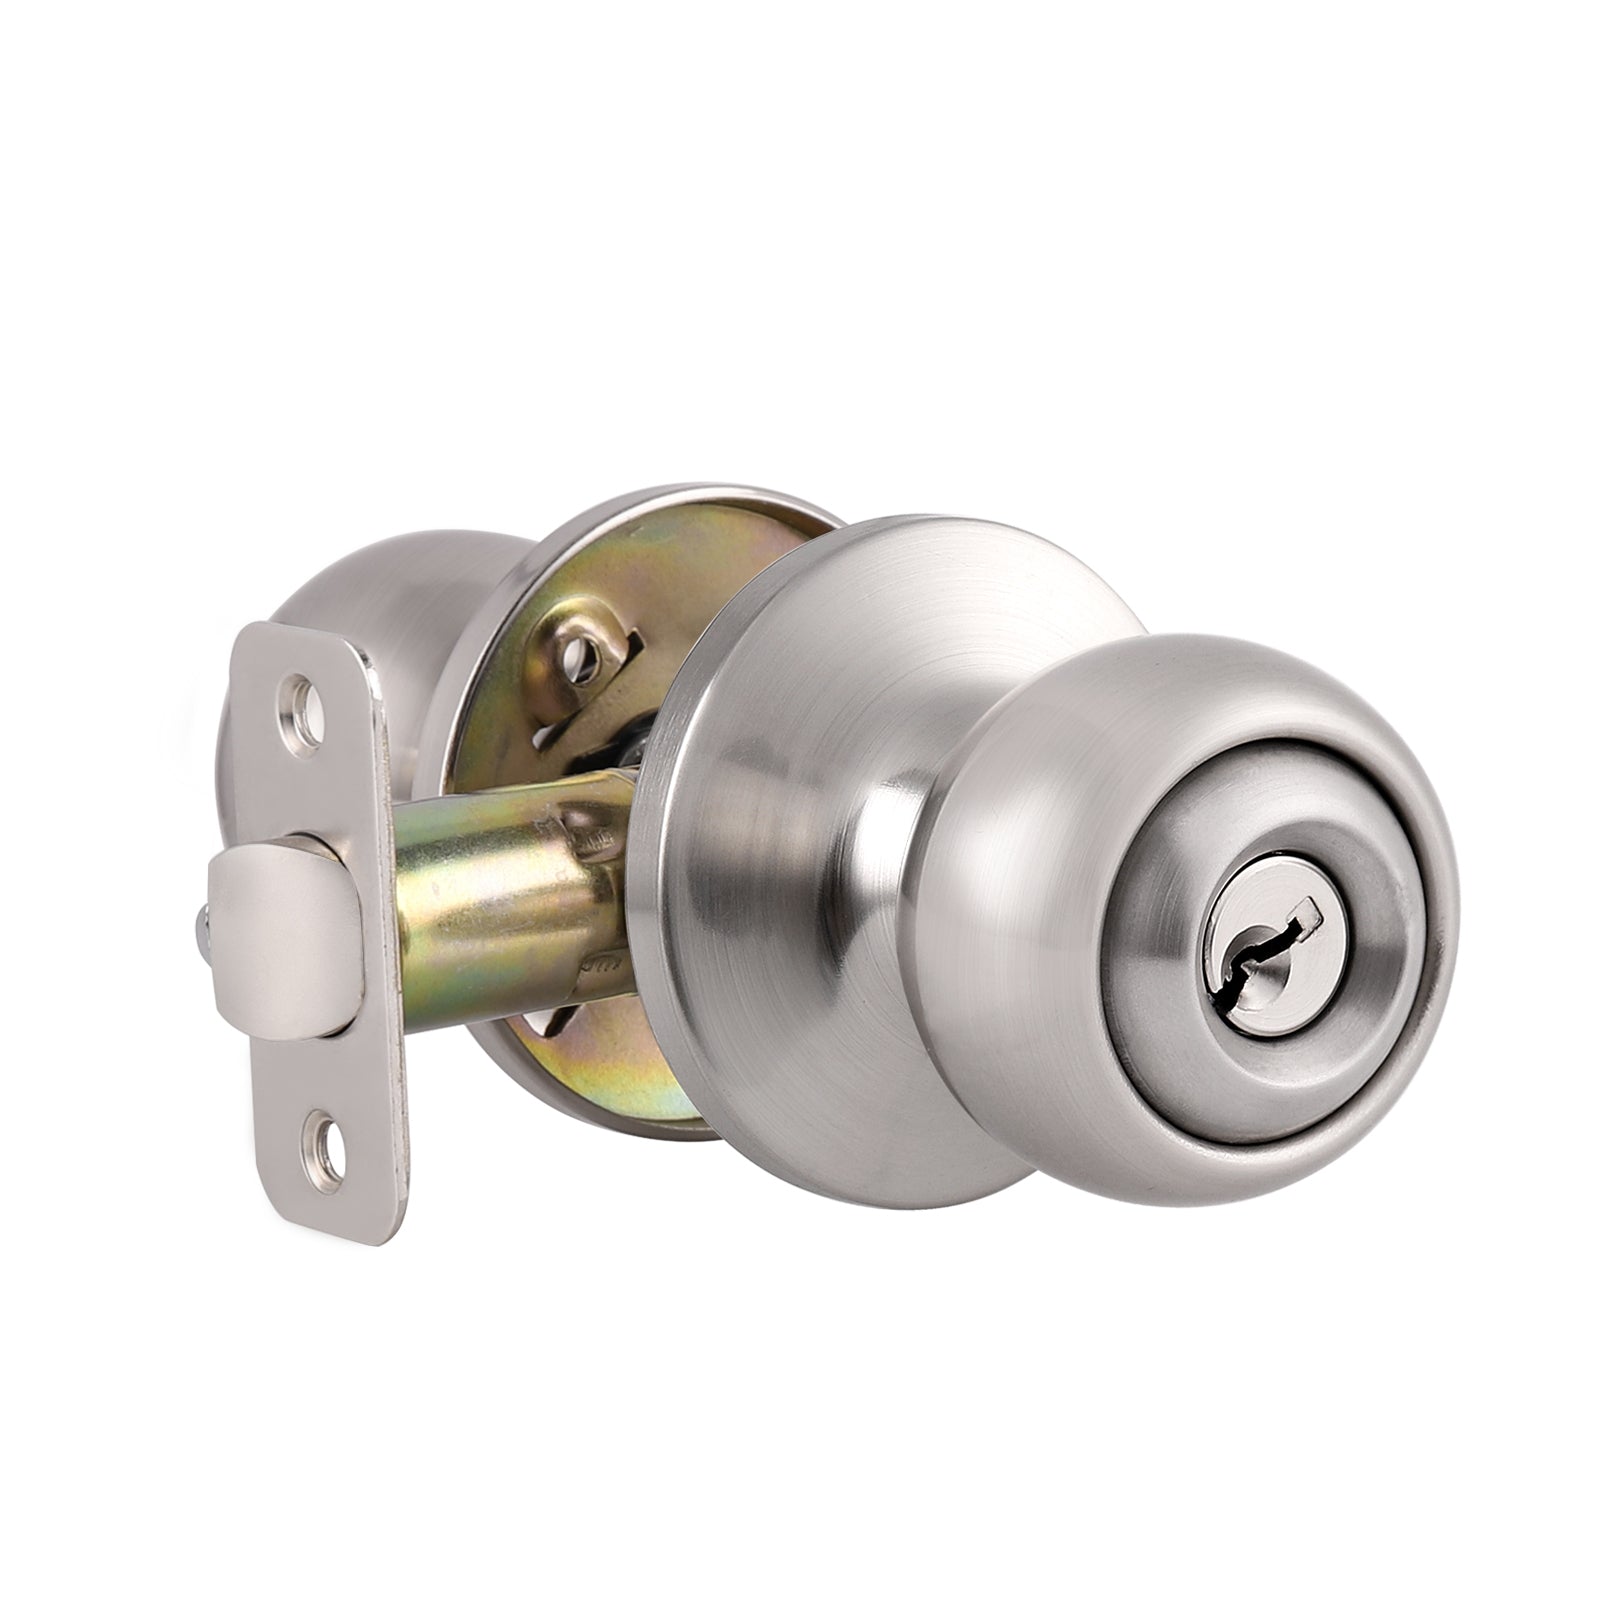 Single Connect Rod Round Ball Knobs Entrance/Privacy/Passage/Dummy Door Lock Knob, Satin Nickel Finish DL5763SN